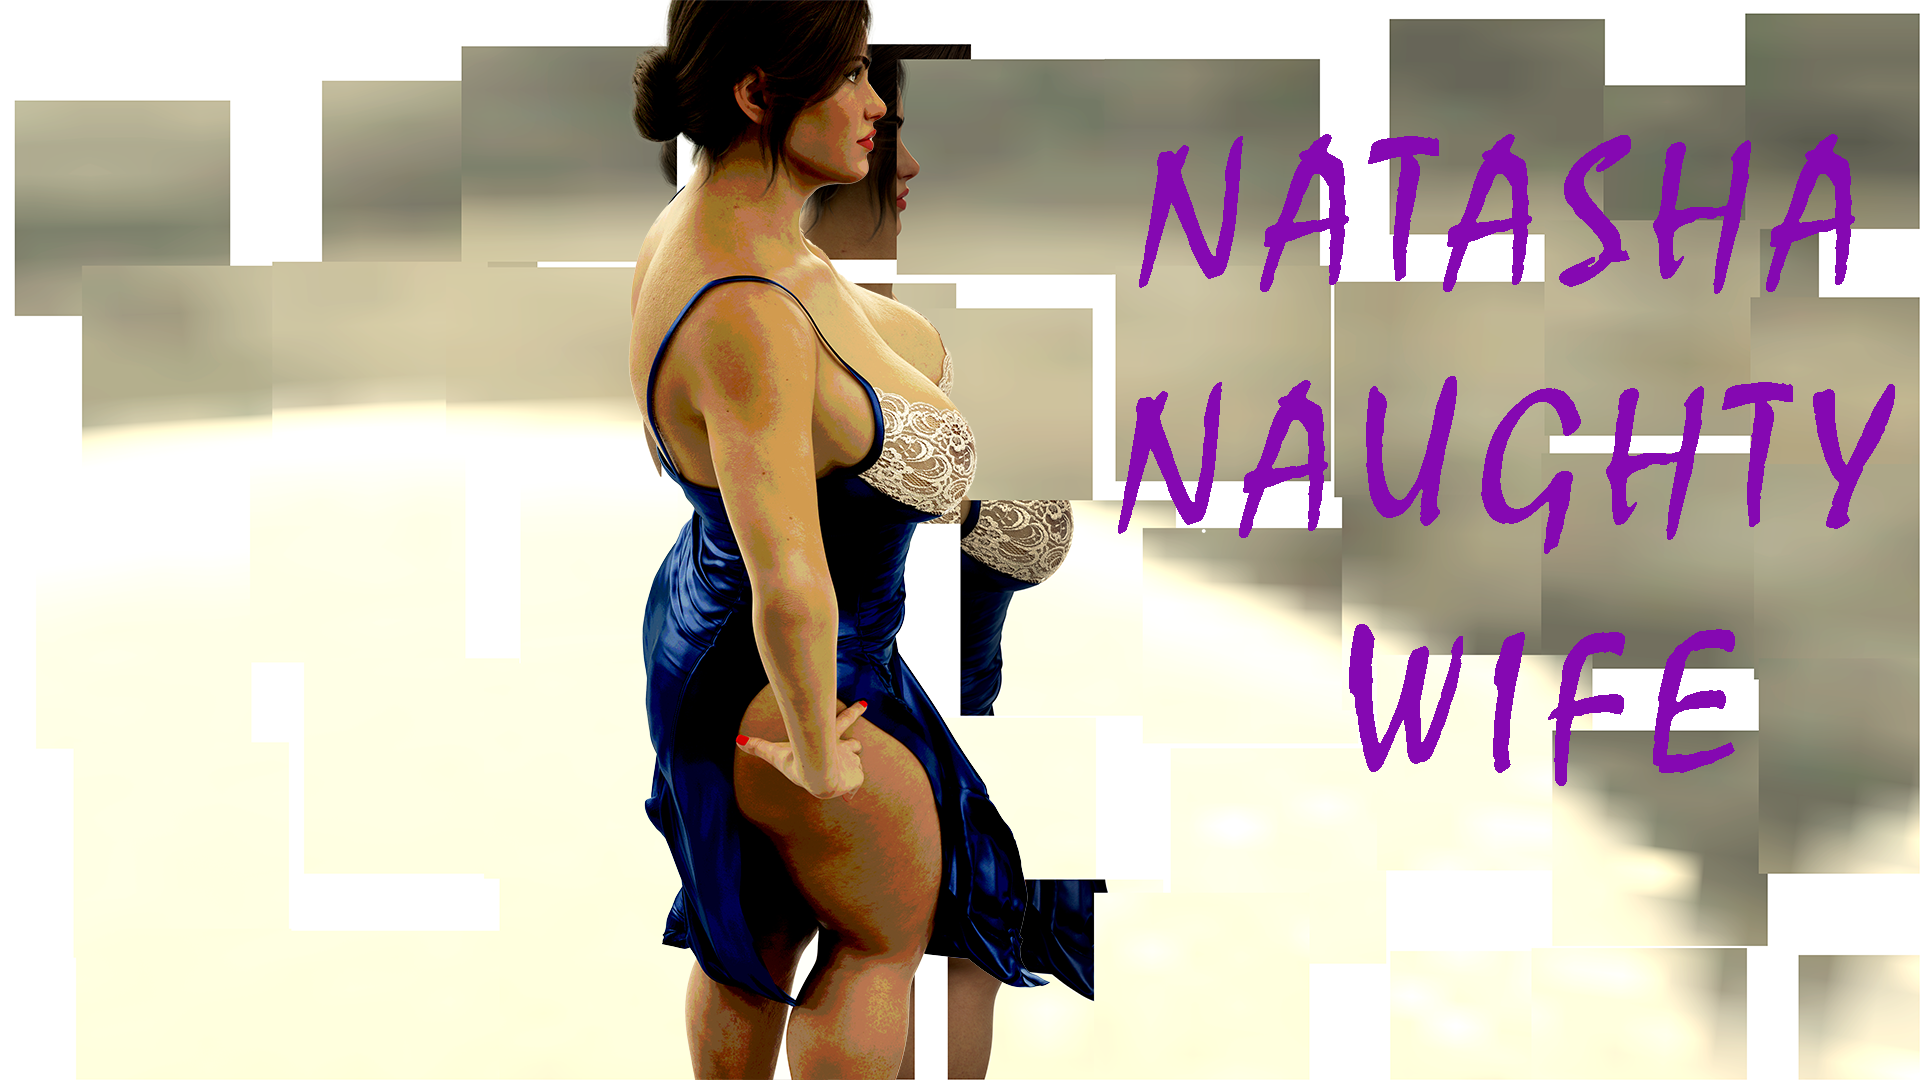 Natasha Naughty Wife1.png